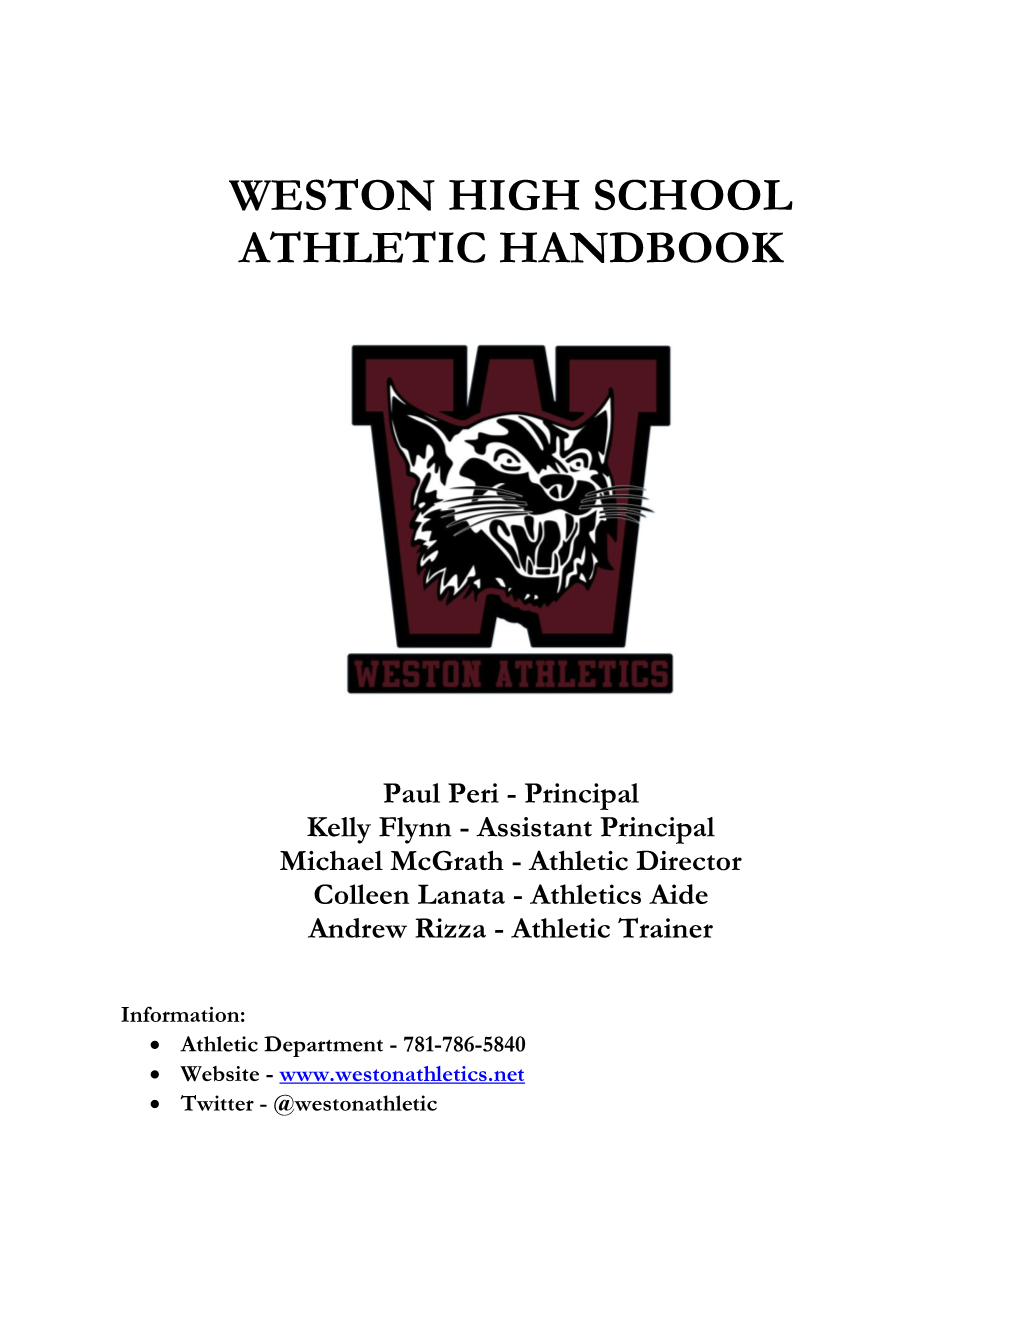 Weston High School Athletic Handbook